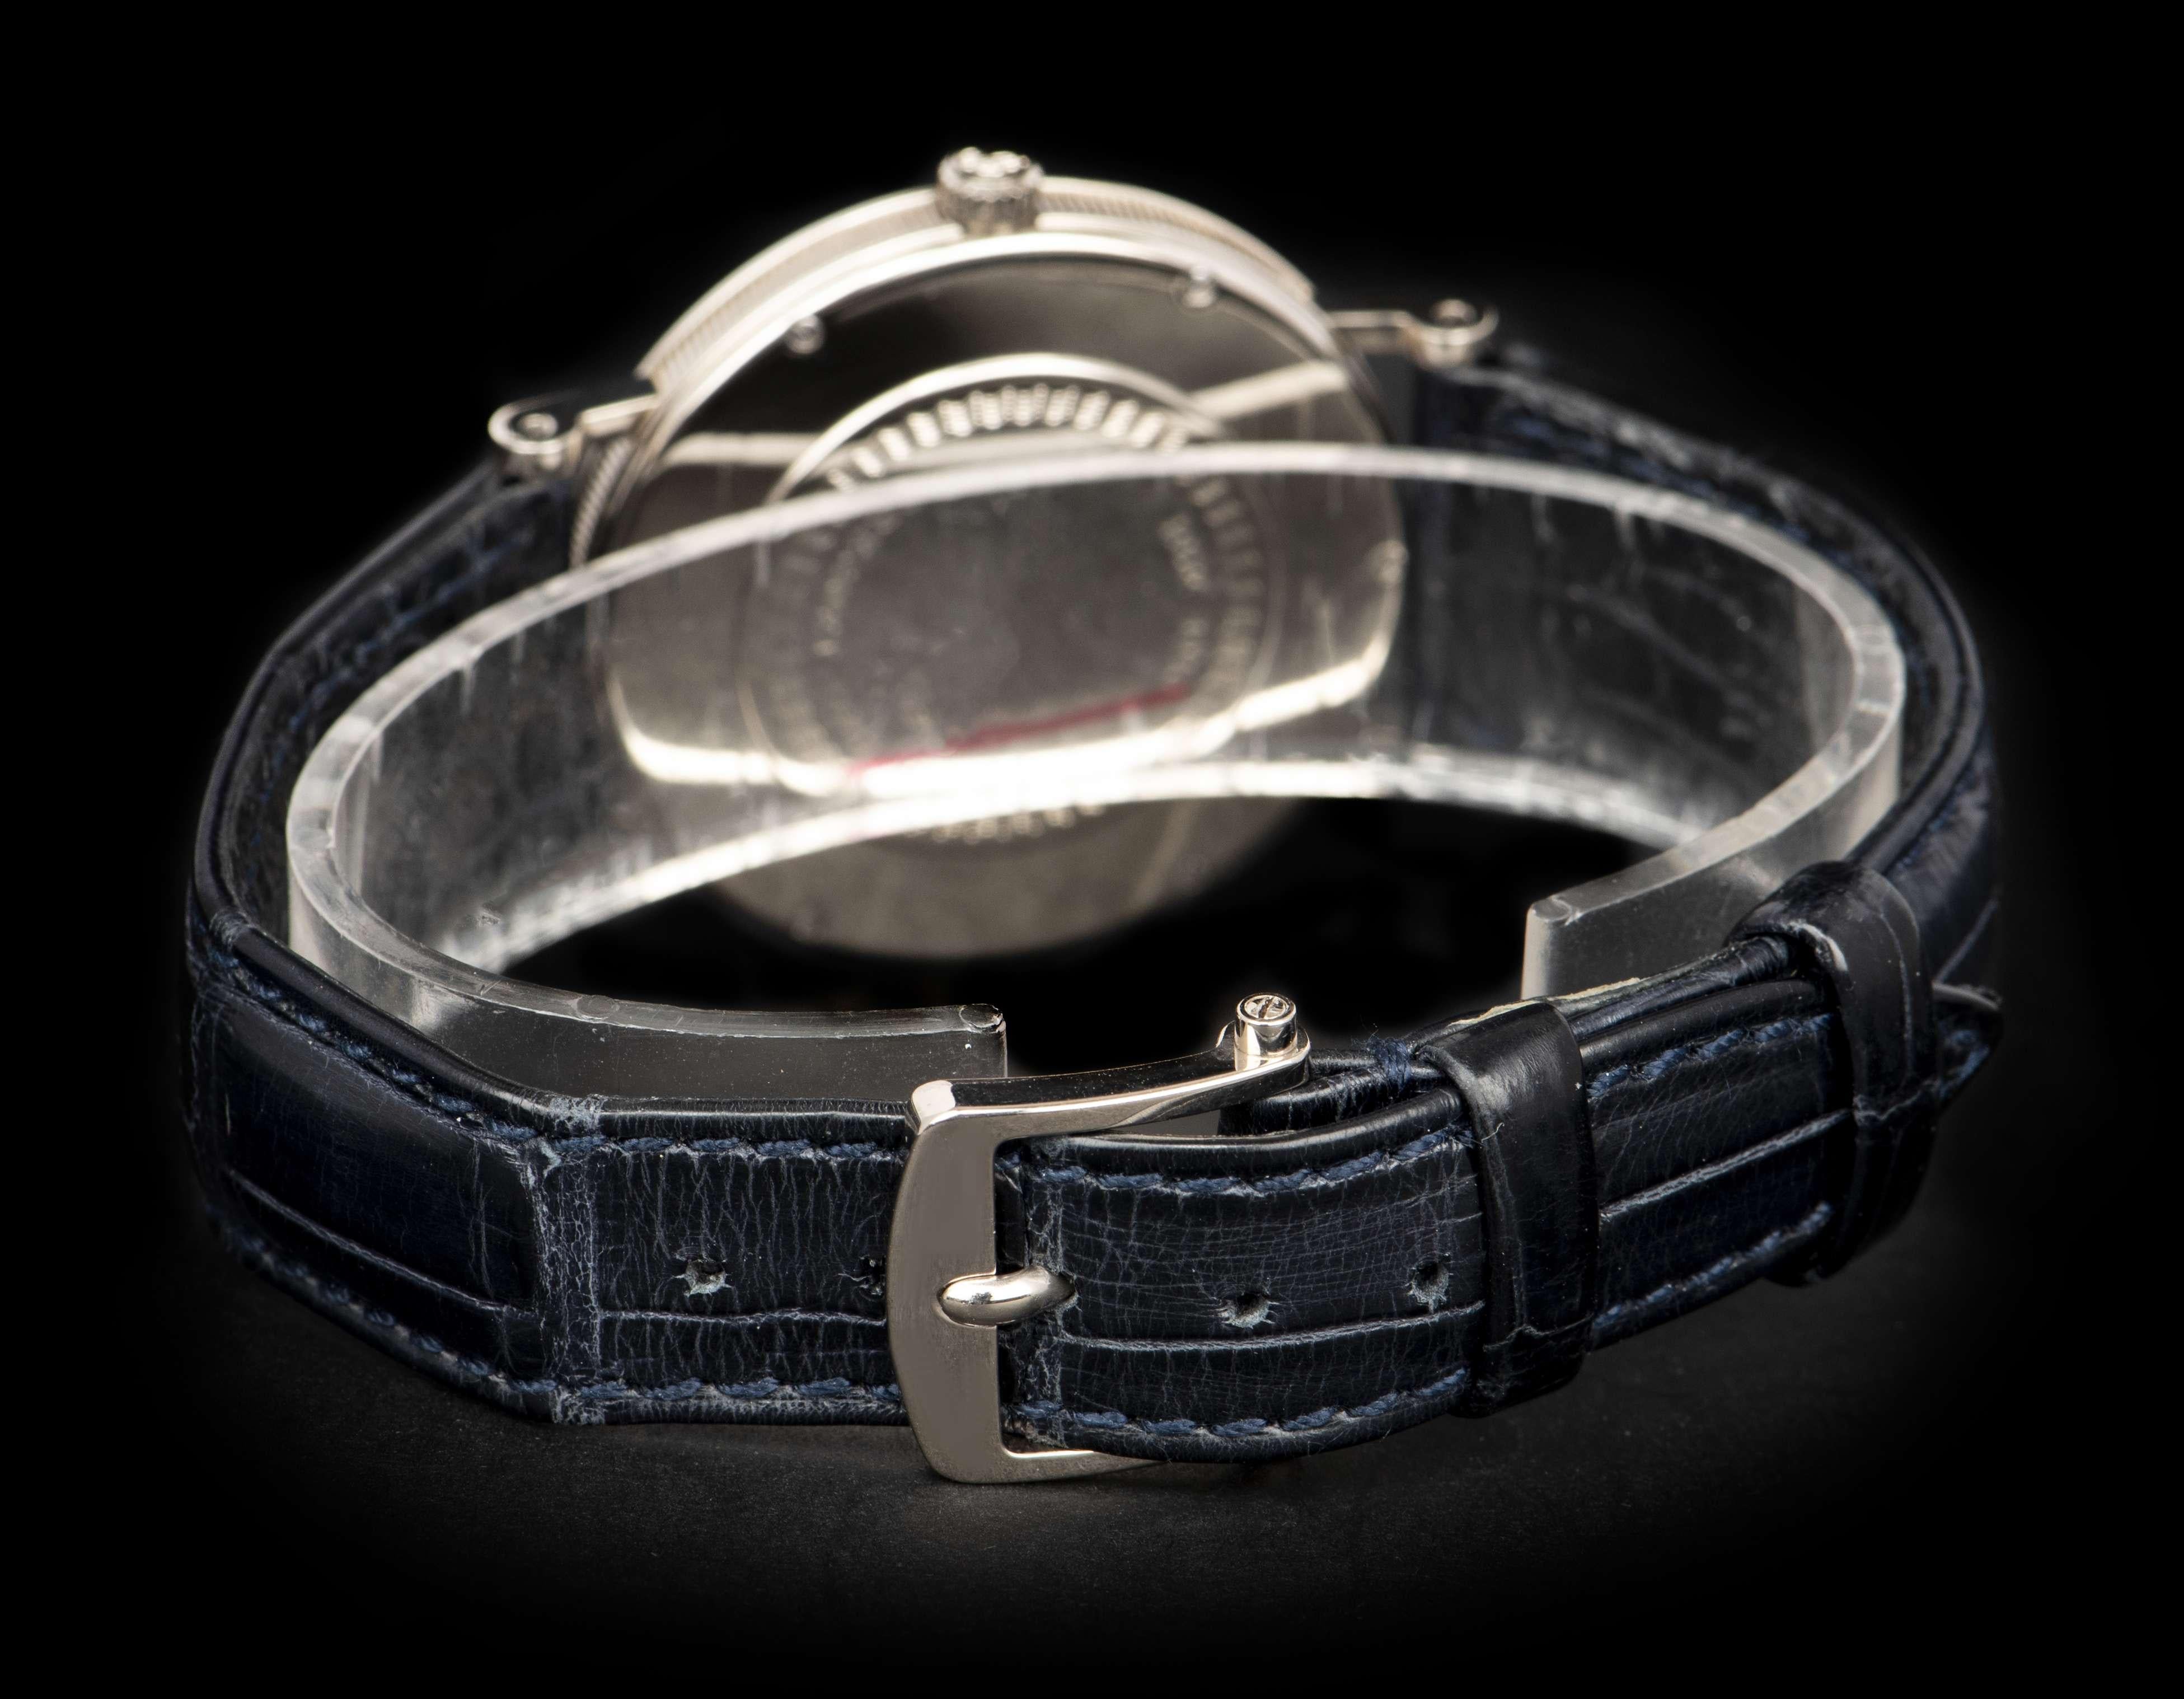 Men's Breguet Classique Gents White Gold Silver Dial 3910 Manual Wind Wristwatch